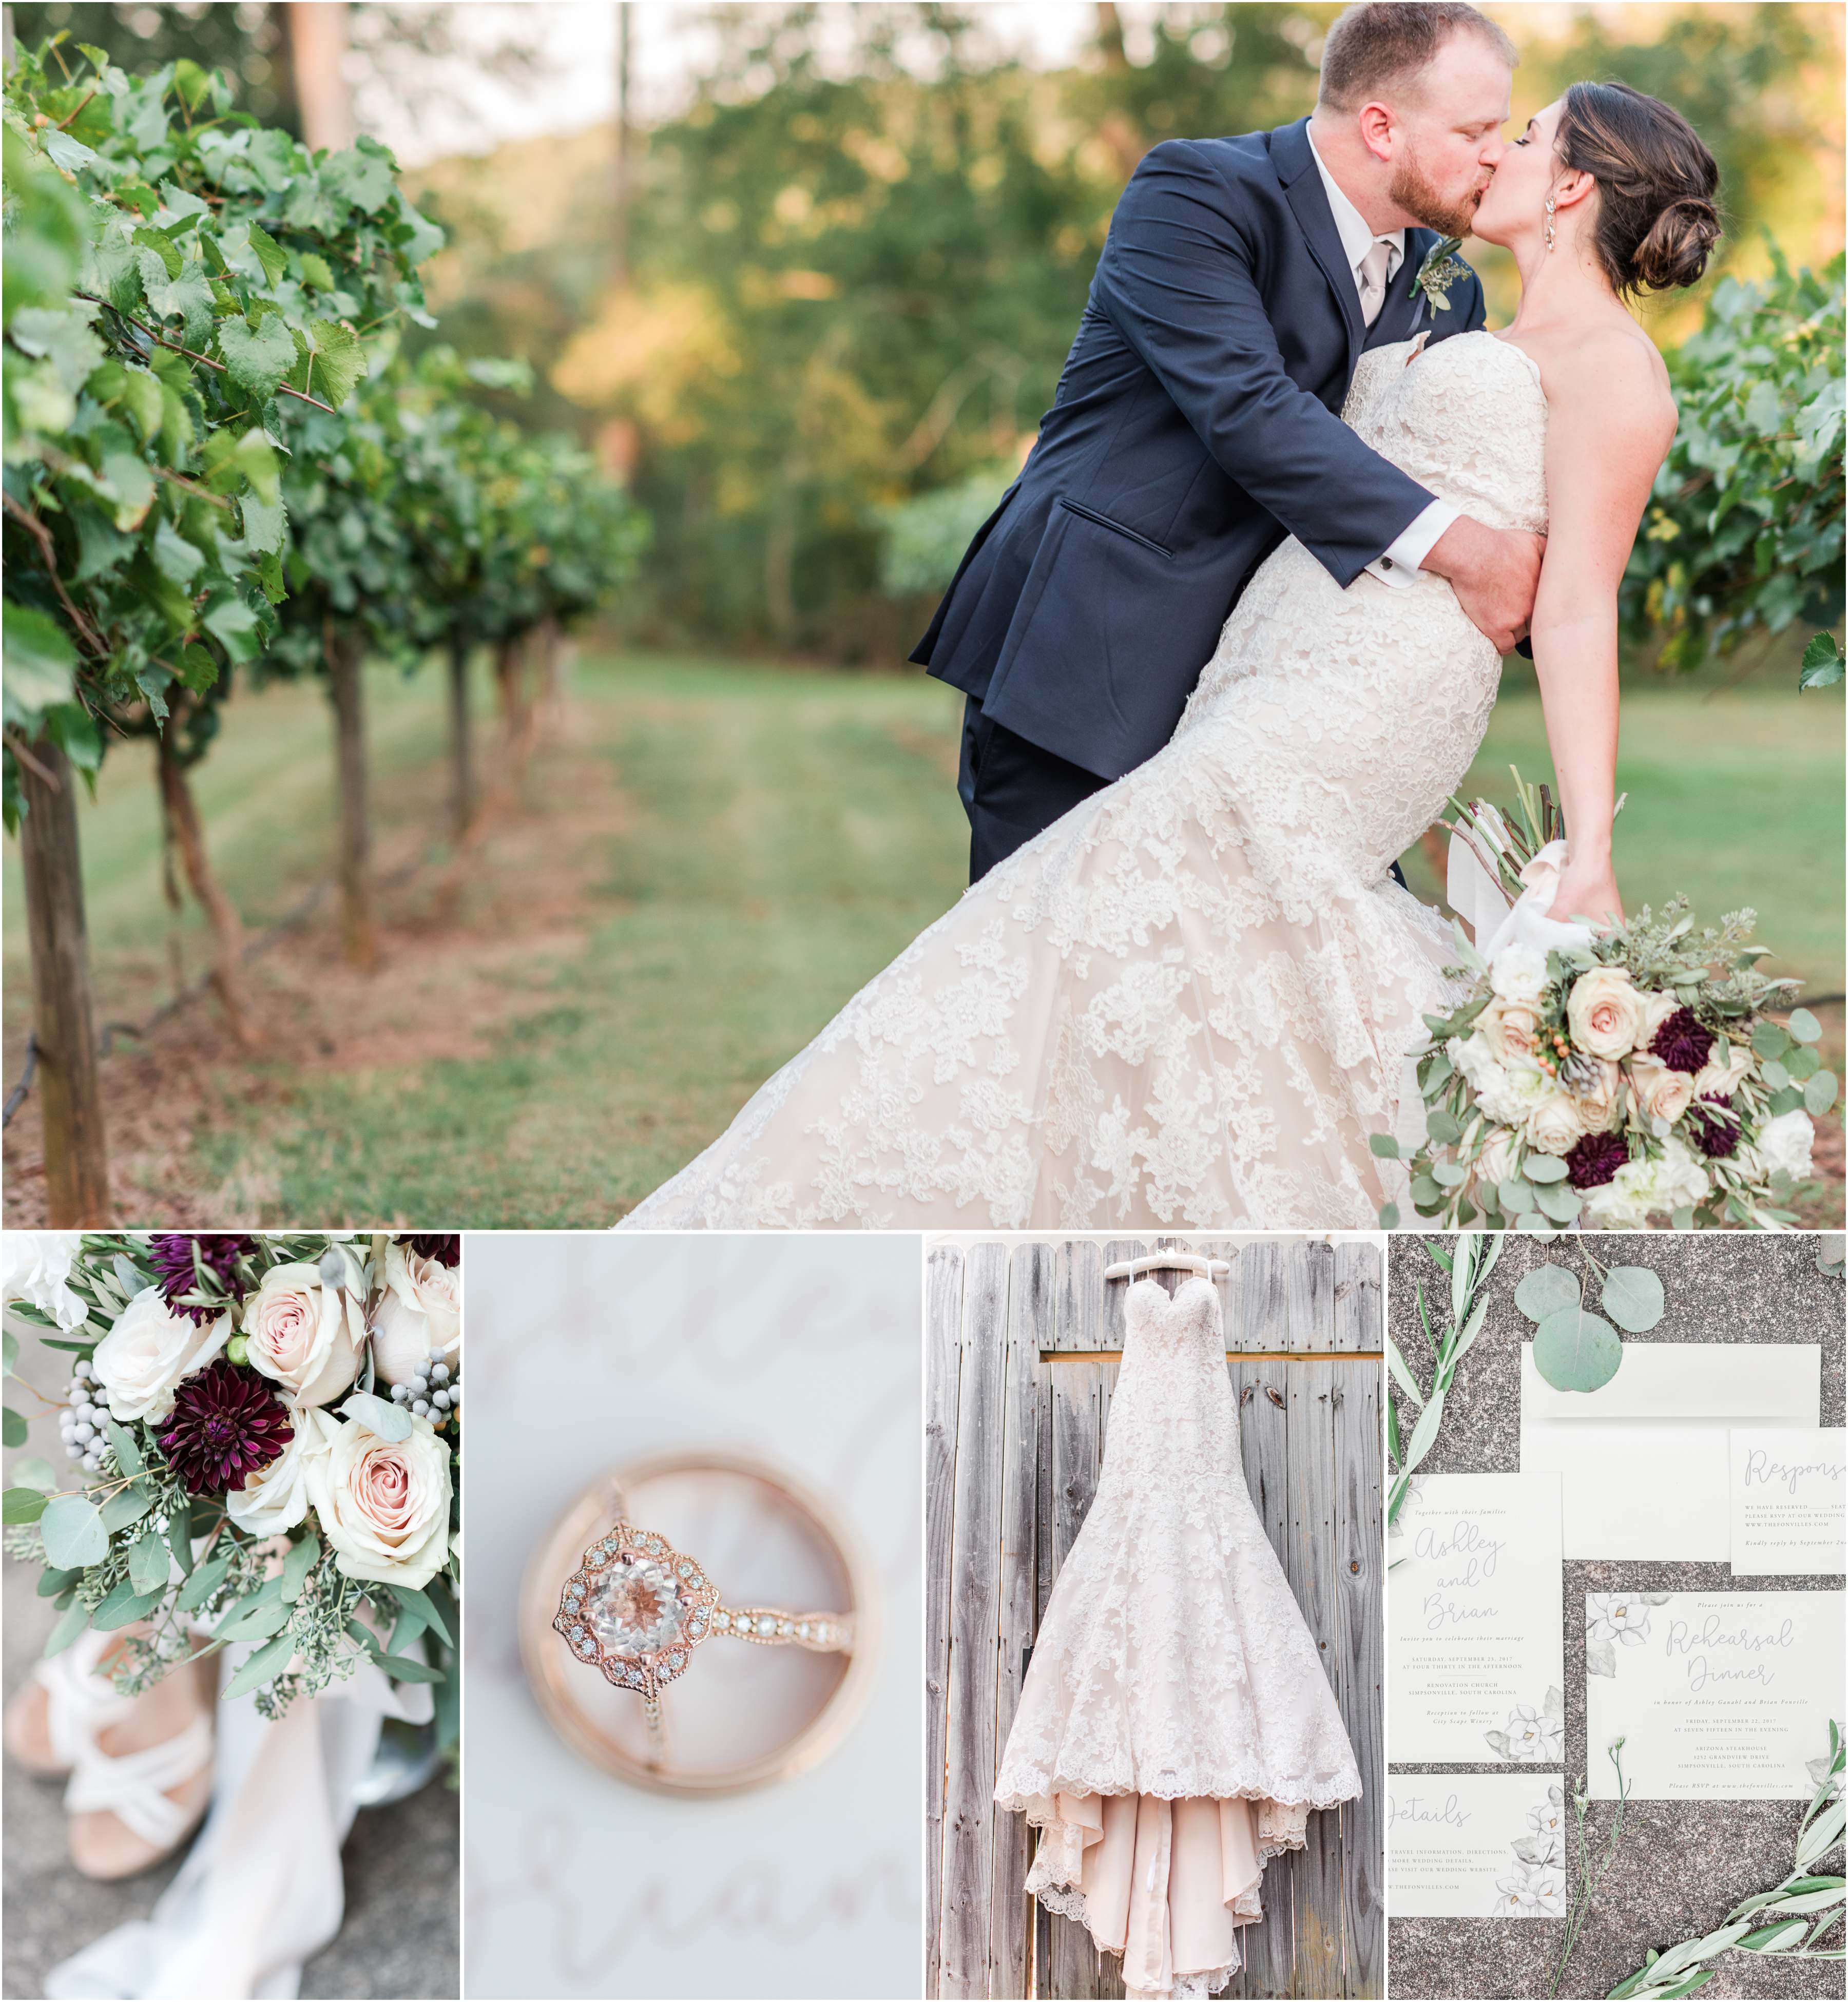 A Fall Vineyard Wedding at Cityscape Winery in Pelzer, South Carolina